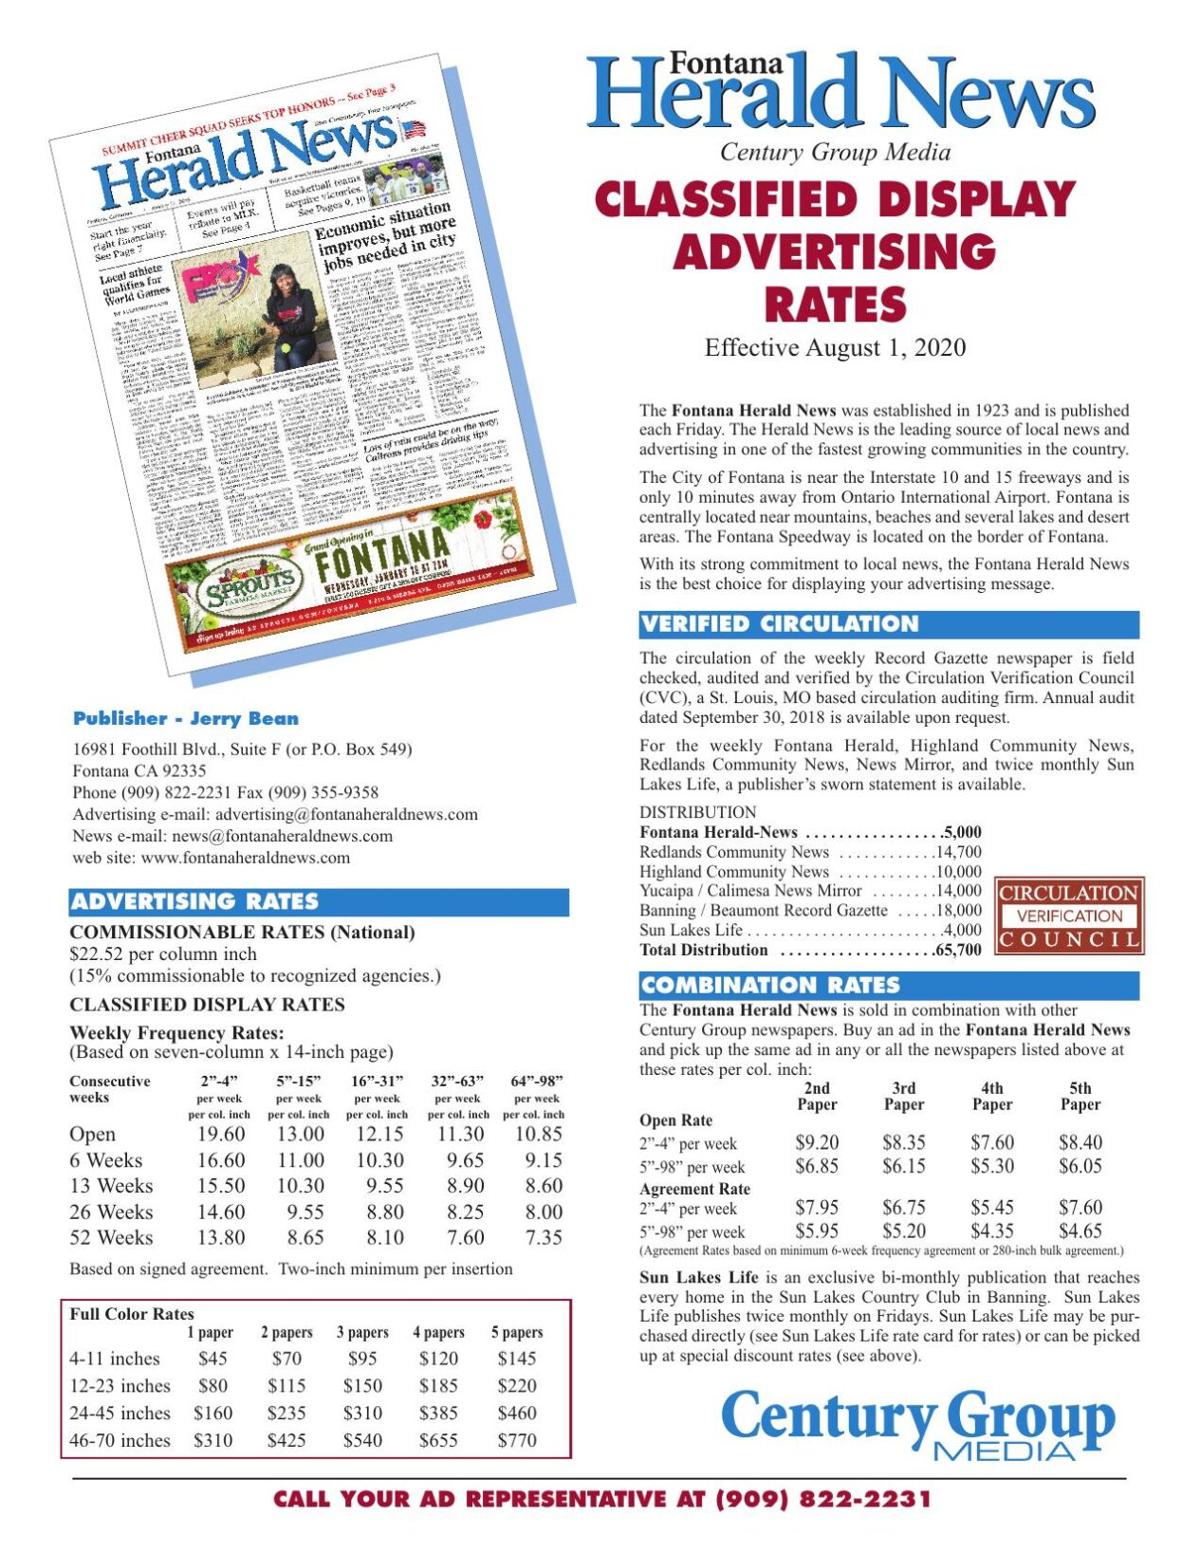 Herald News - Classified Display Rates